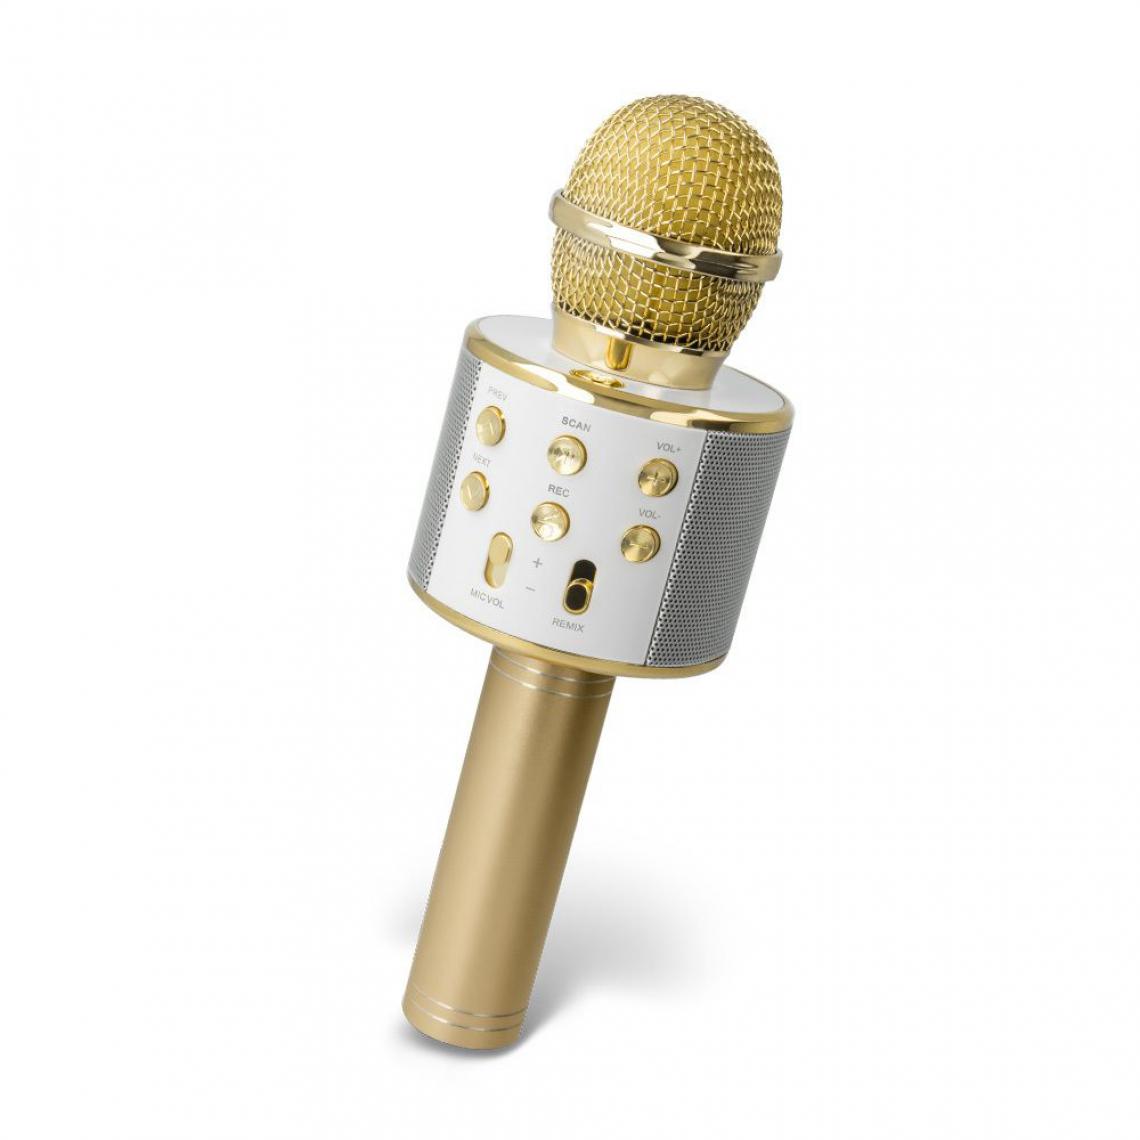 Ozzzo - Microphone Karaoke bluetooth haut parleur ozzzo Gold Or pour Samsung Galaxy M51 - Autres accessoires smartphone